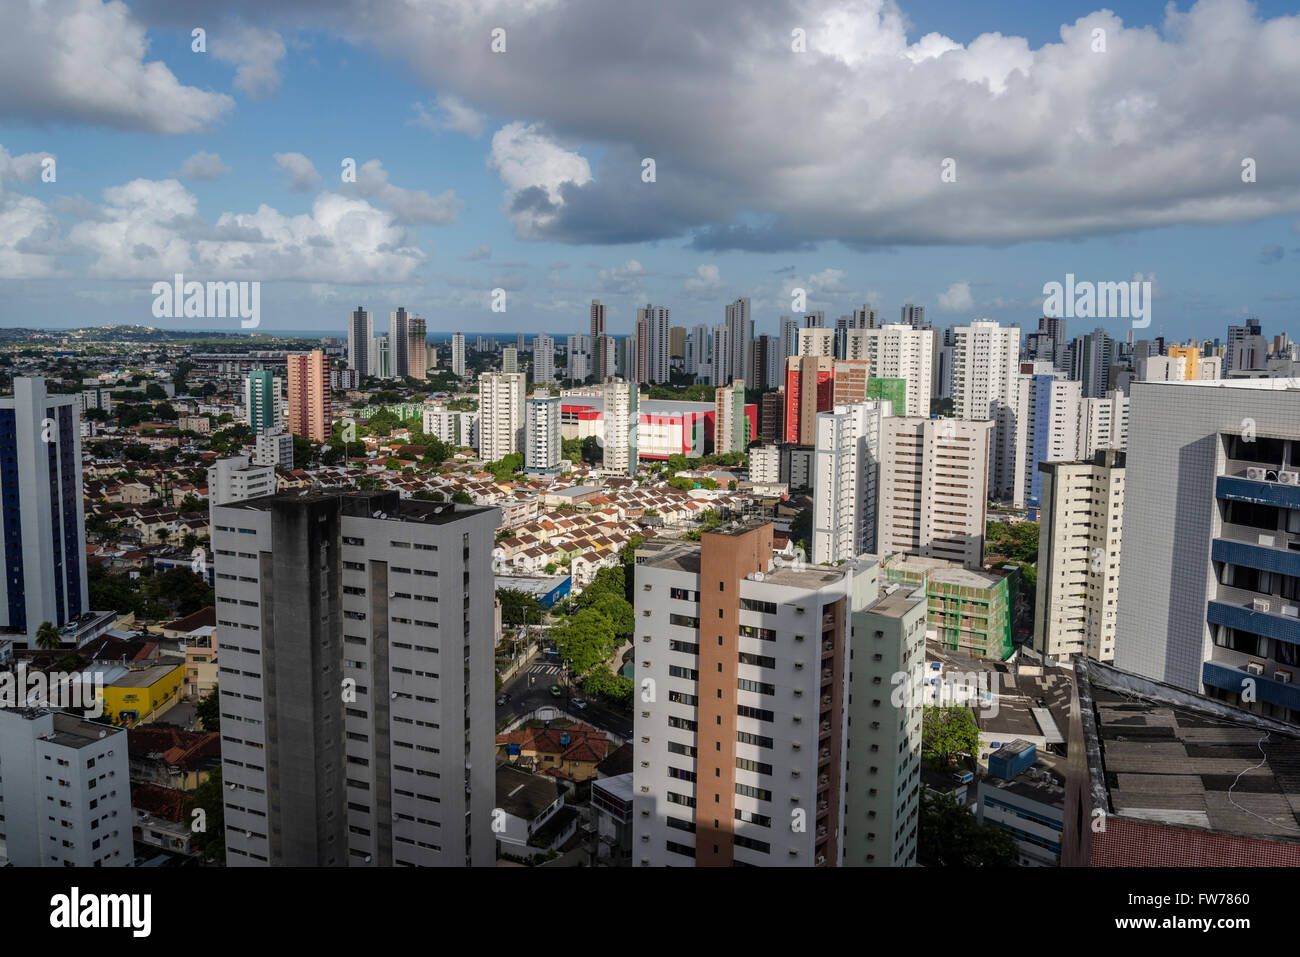 Casa Amarela neighbourhood, Recife, Pernambuco, Brazil Stock Photo